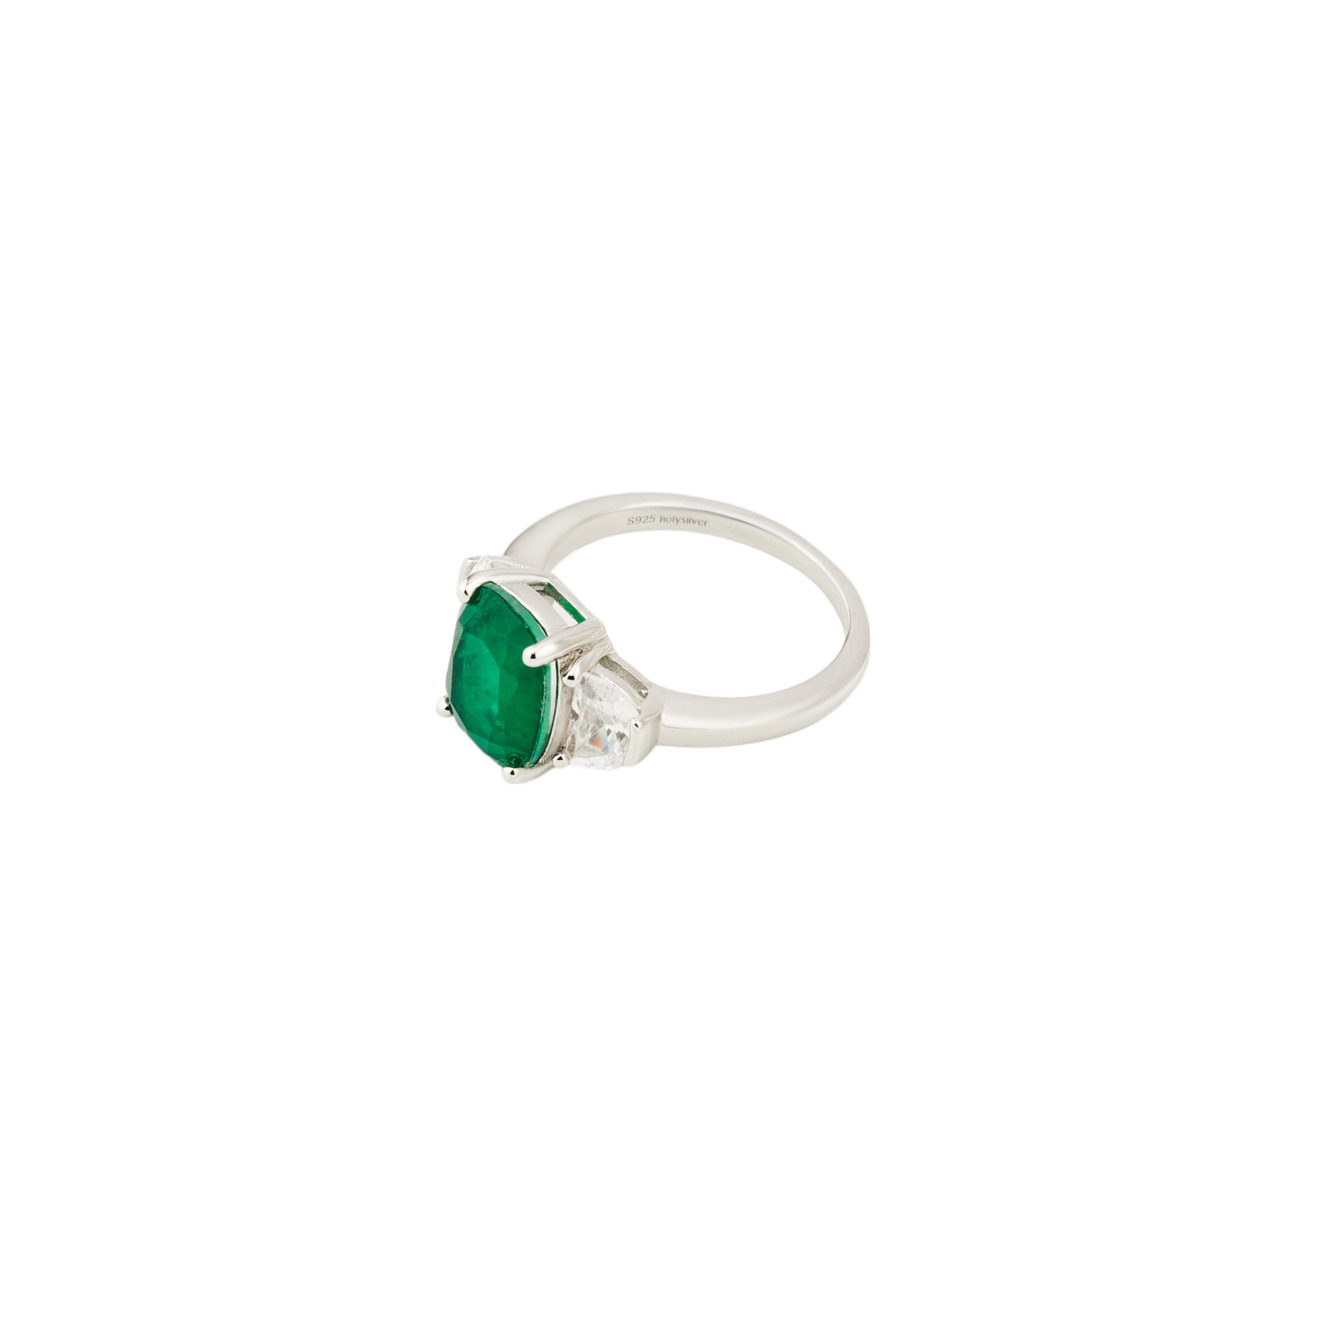 Holy Silver Кольцо из серебра с крупным зеленым кристаллом holy silver биколорное кольцо из серебра с вставкой из зеленого кристалла